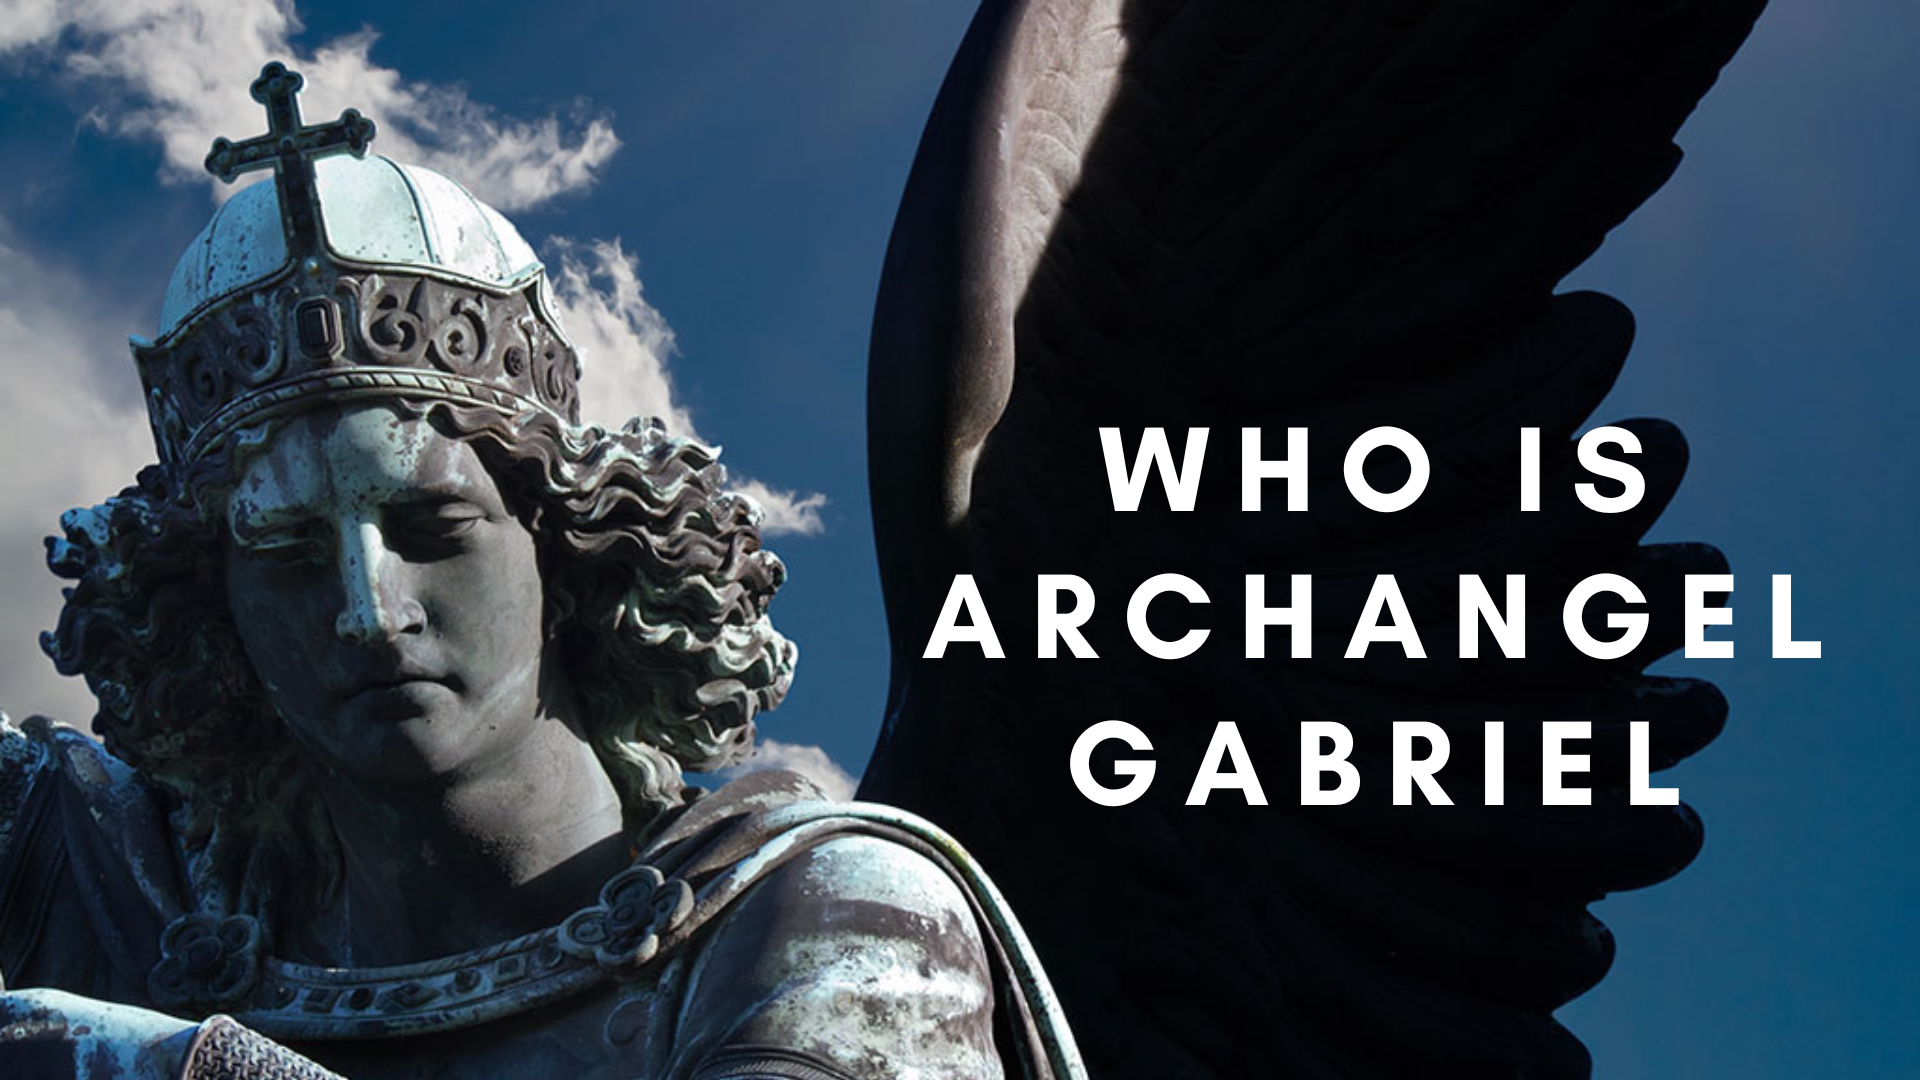 Archangel Gabriel statue with words Who Is Archangel Gabriel